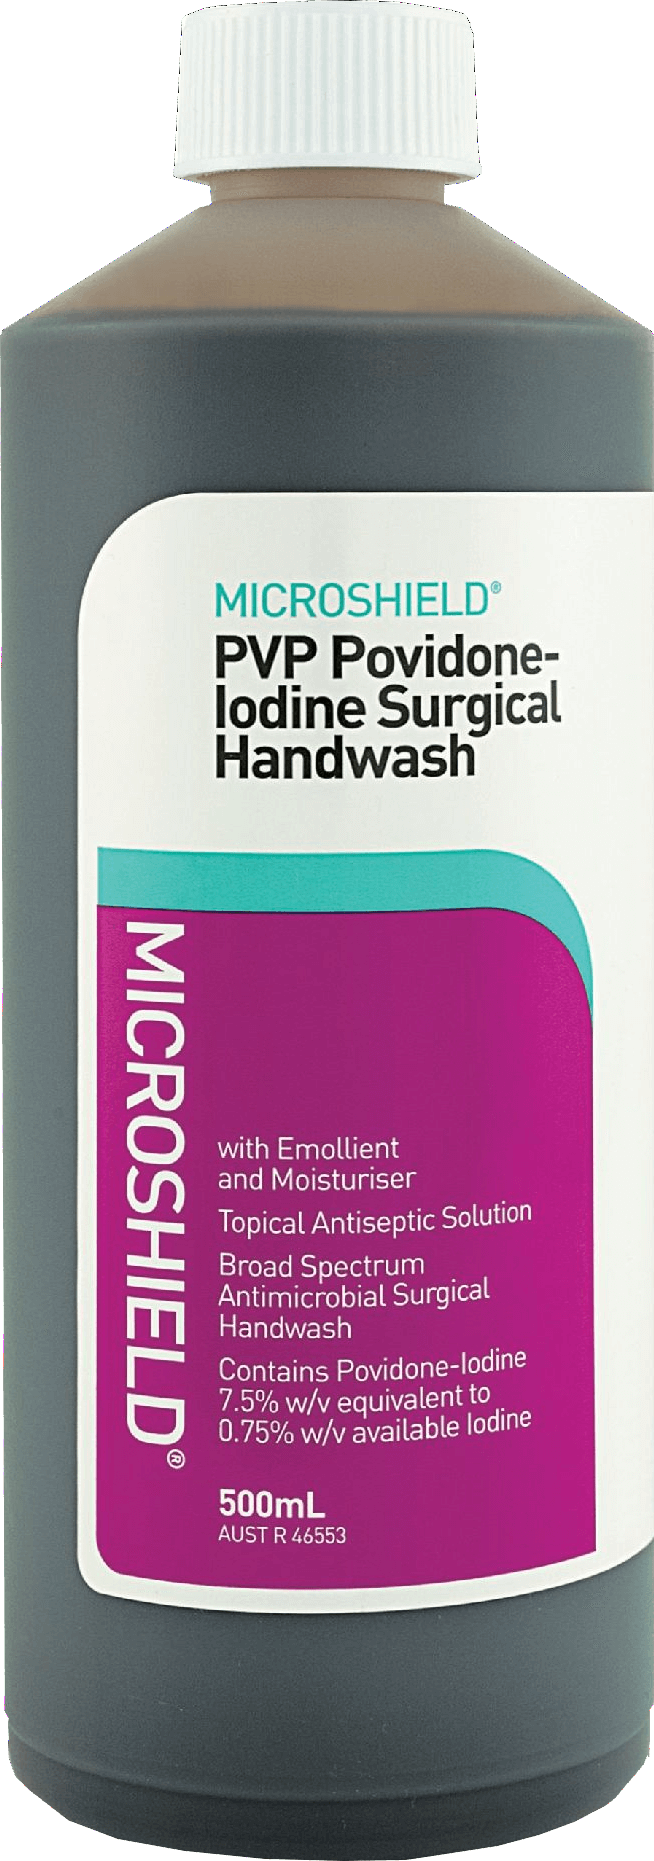 Microshield PVP Povidone-Iodine Surgical Handwash